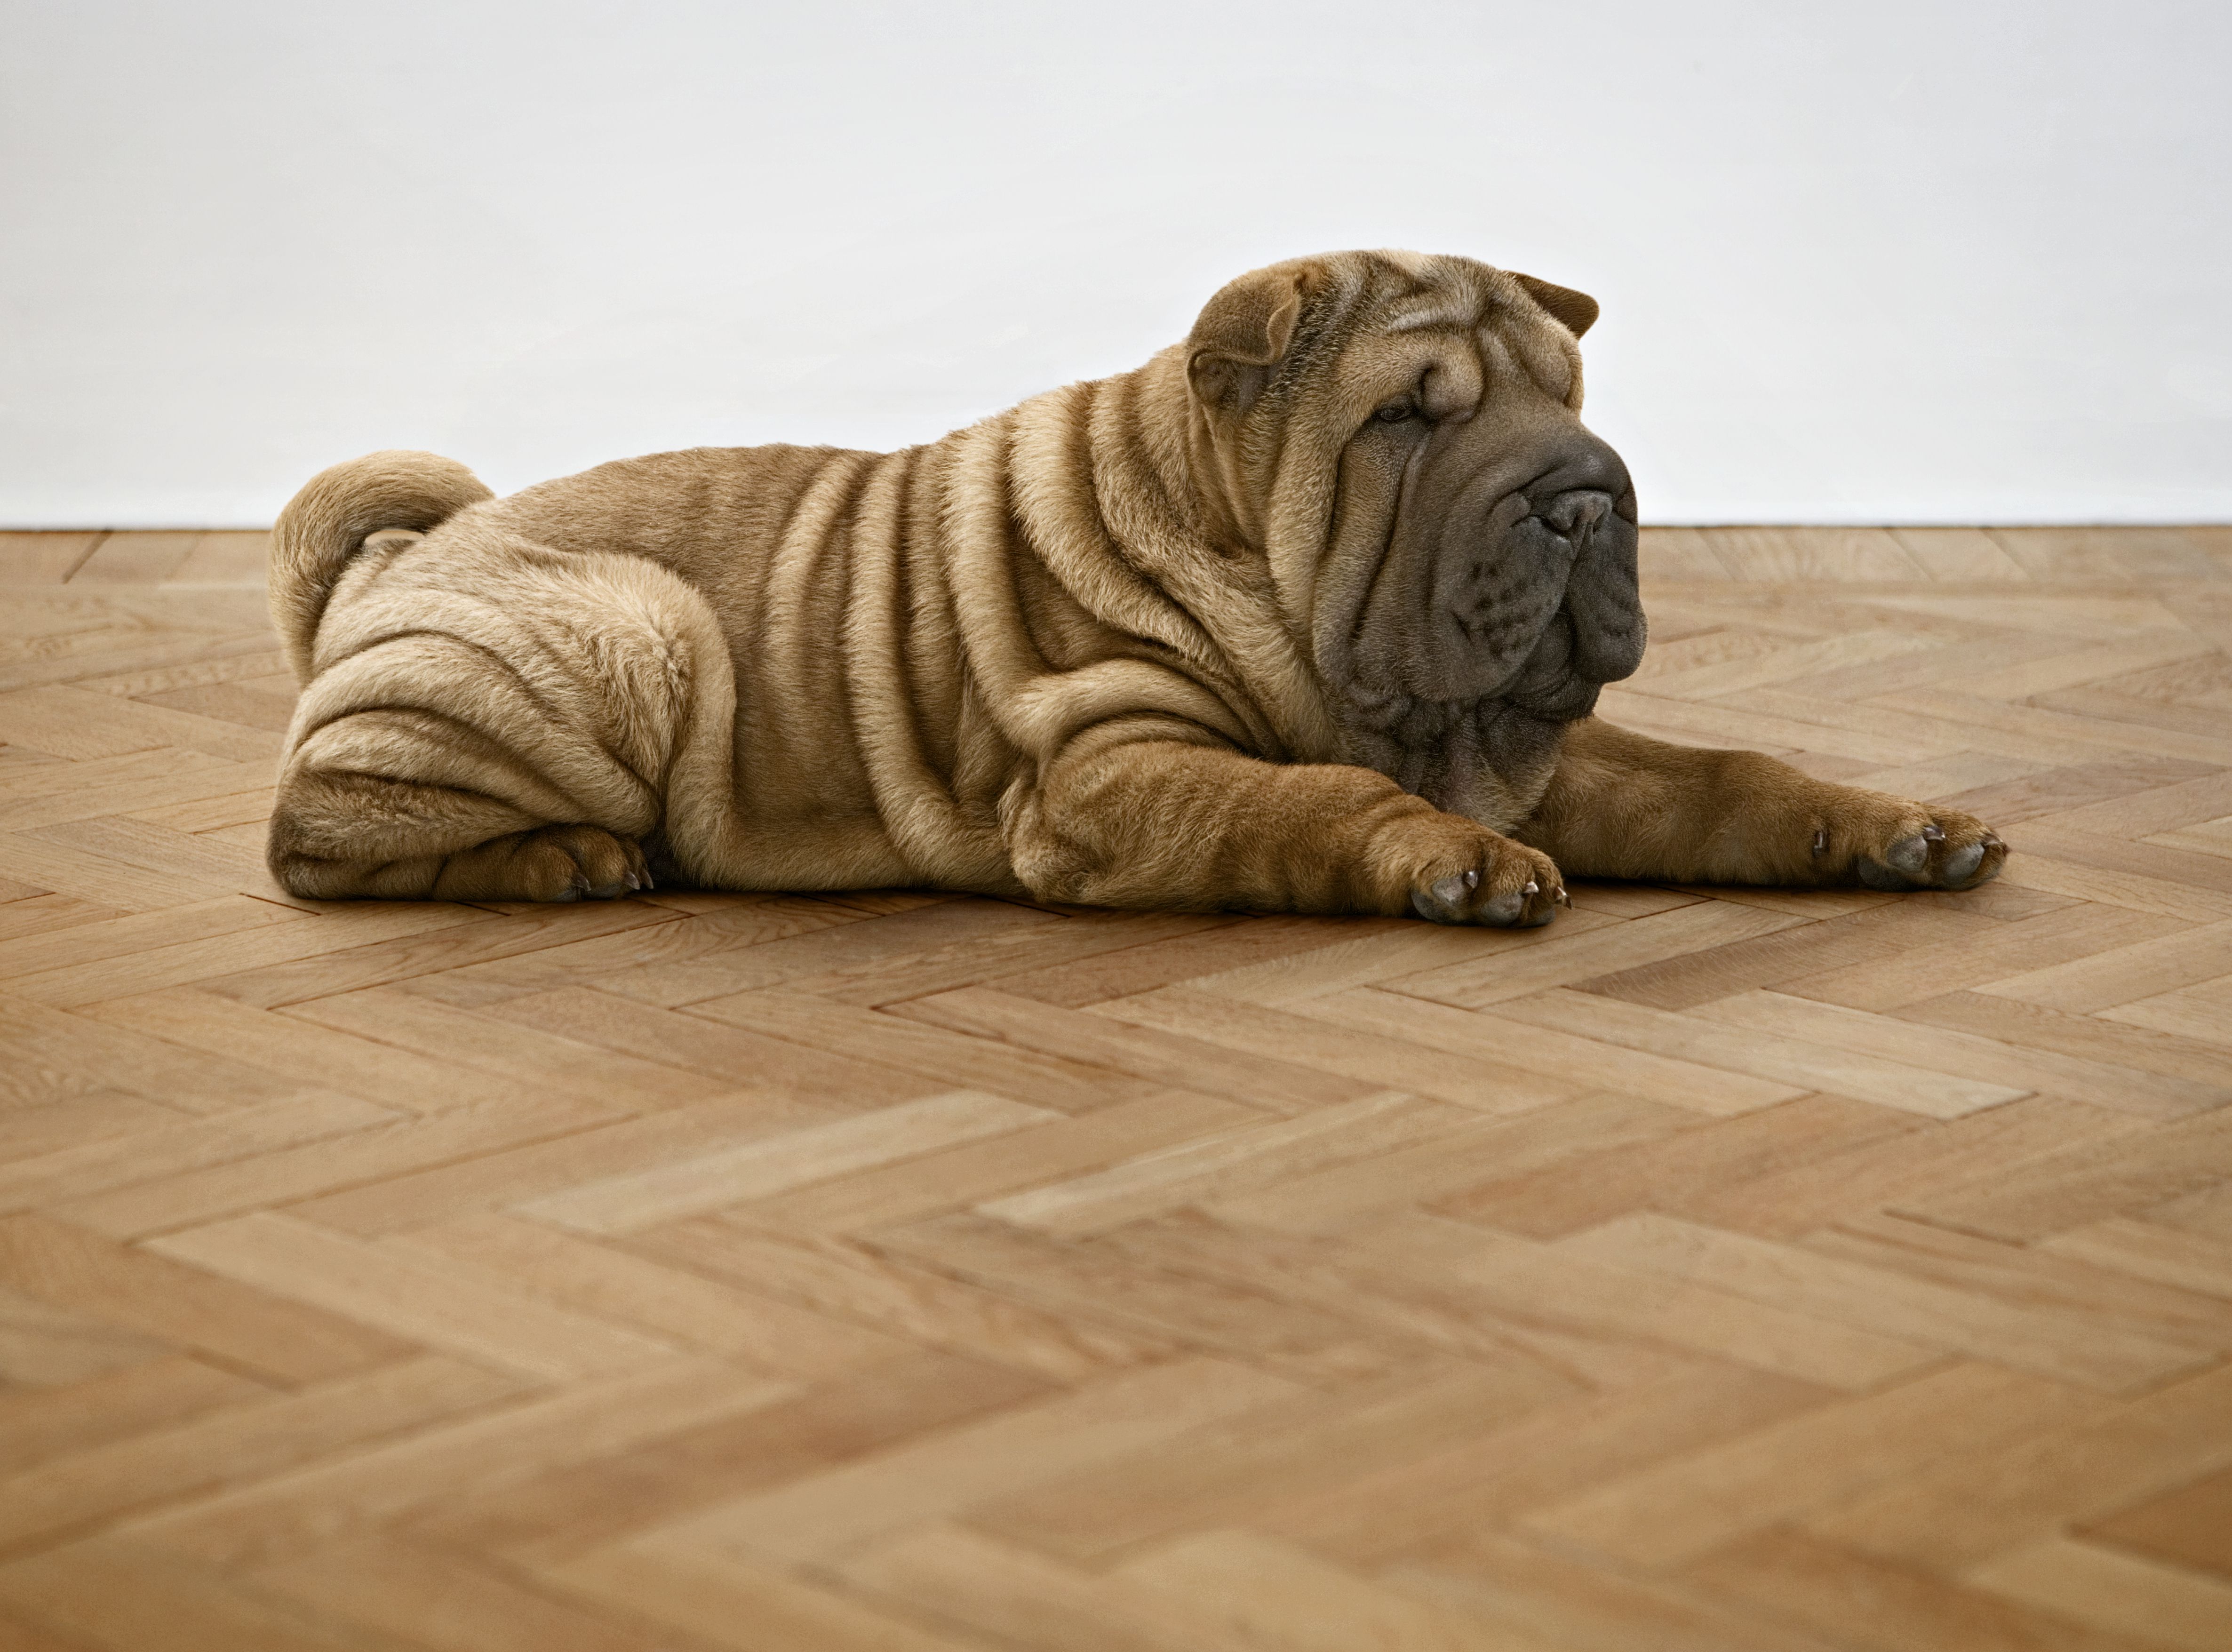 Shar Pei dog lying down on a wooden floor.